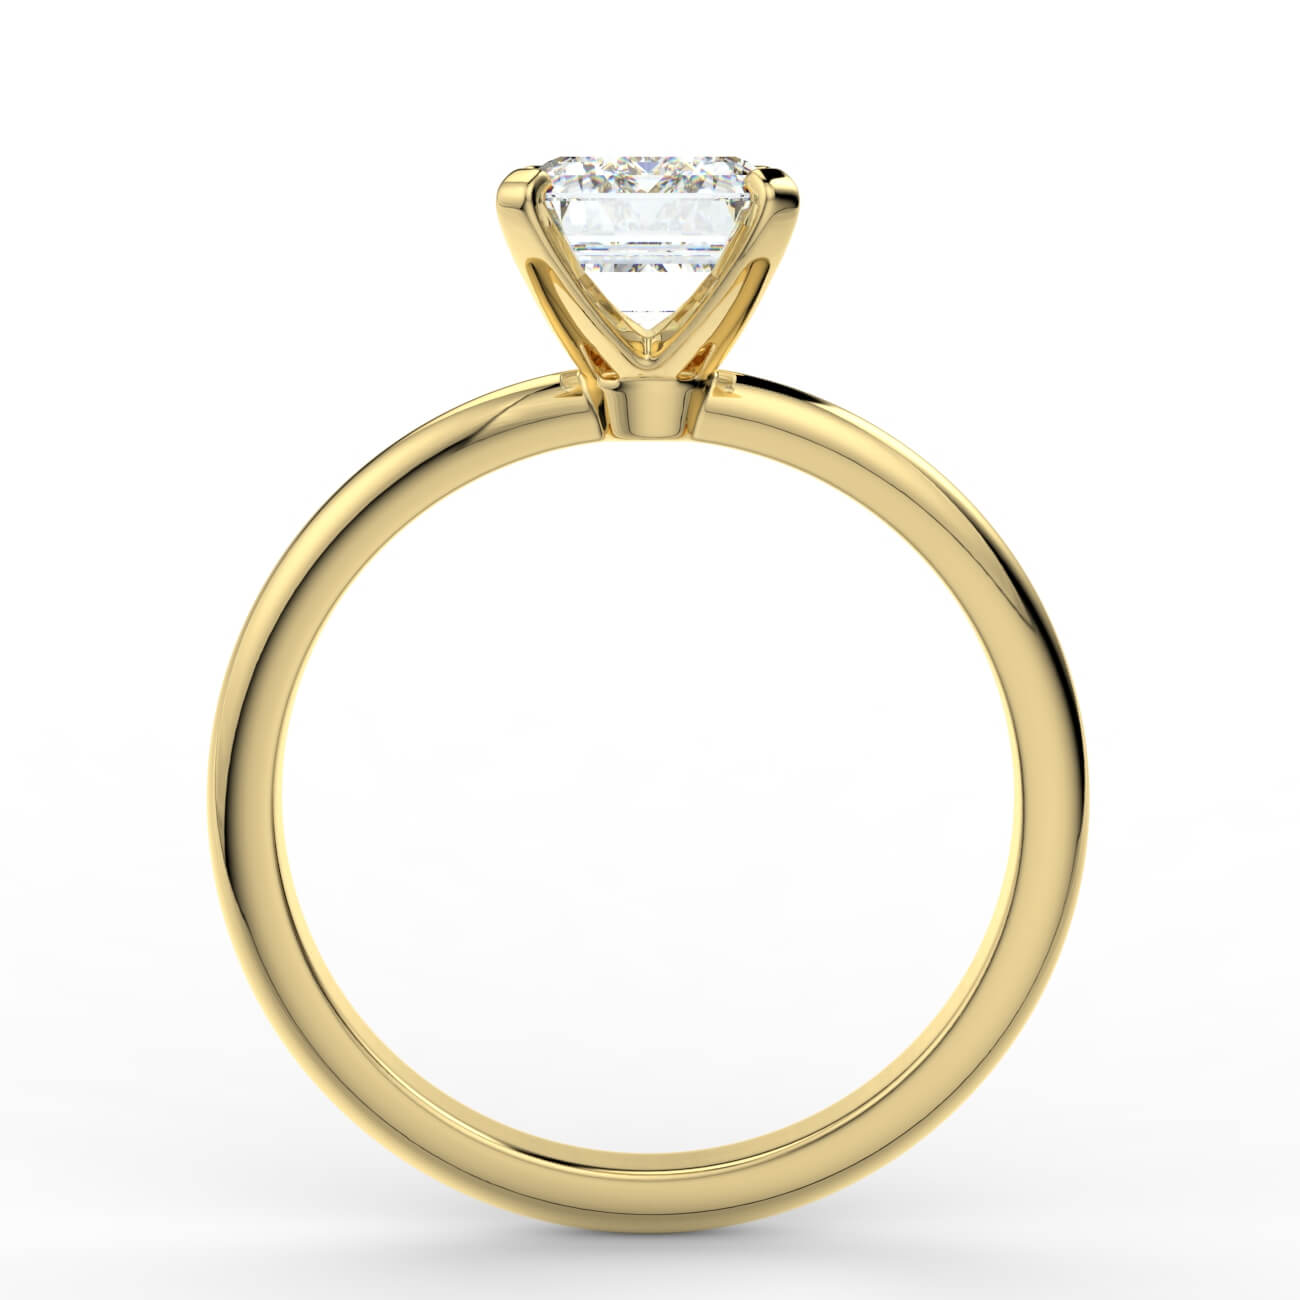 Knife-edge solitaire emerald cut diamond engagement ring in yellow gold – Australian Diamond Network